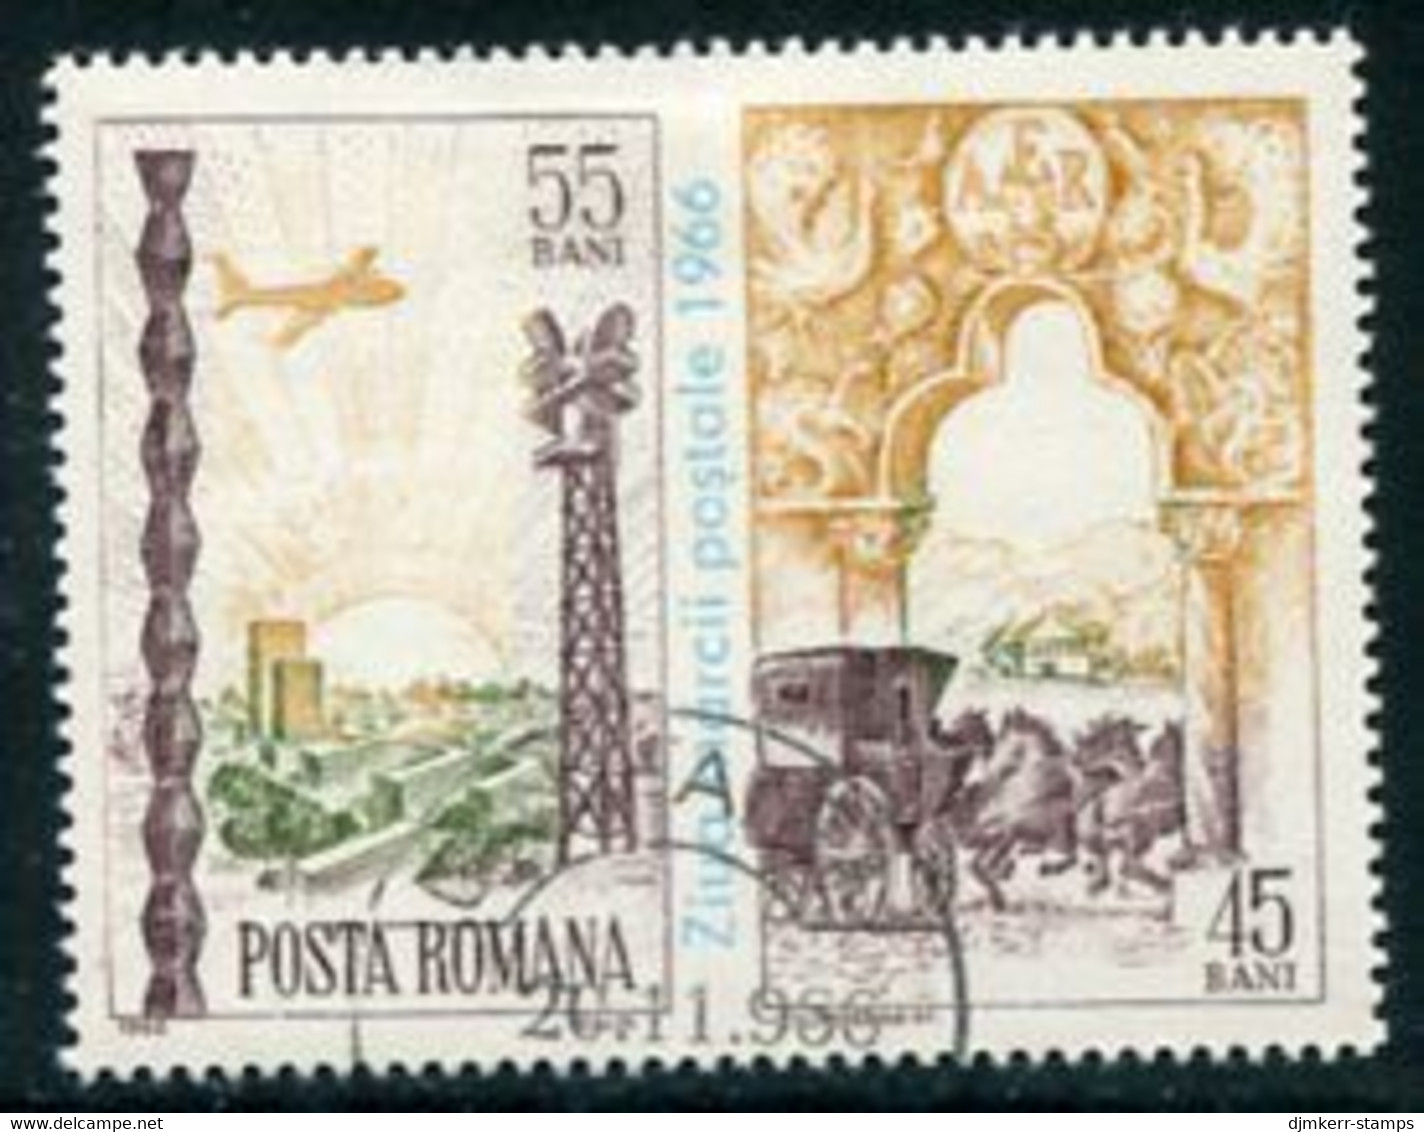 ROMANIA 1966 Stamp Day Used.  Michel 2552 - Usado